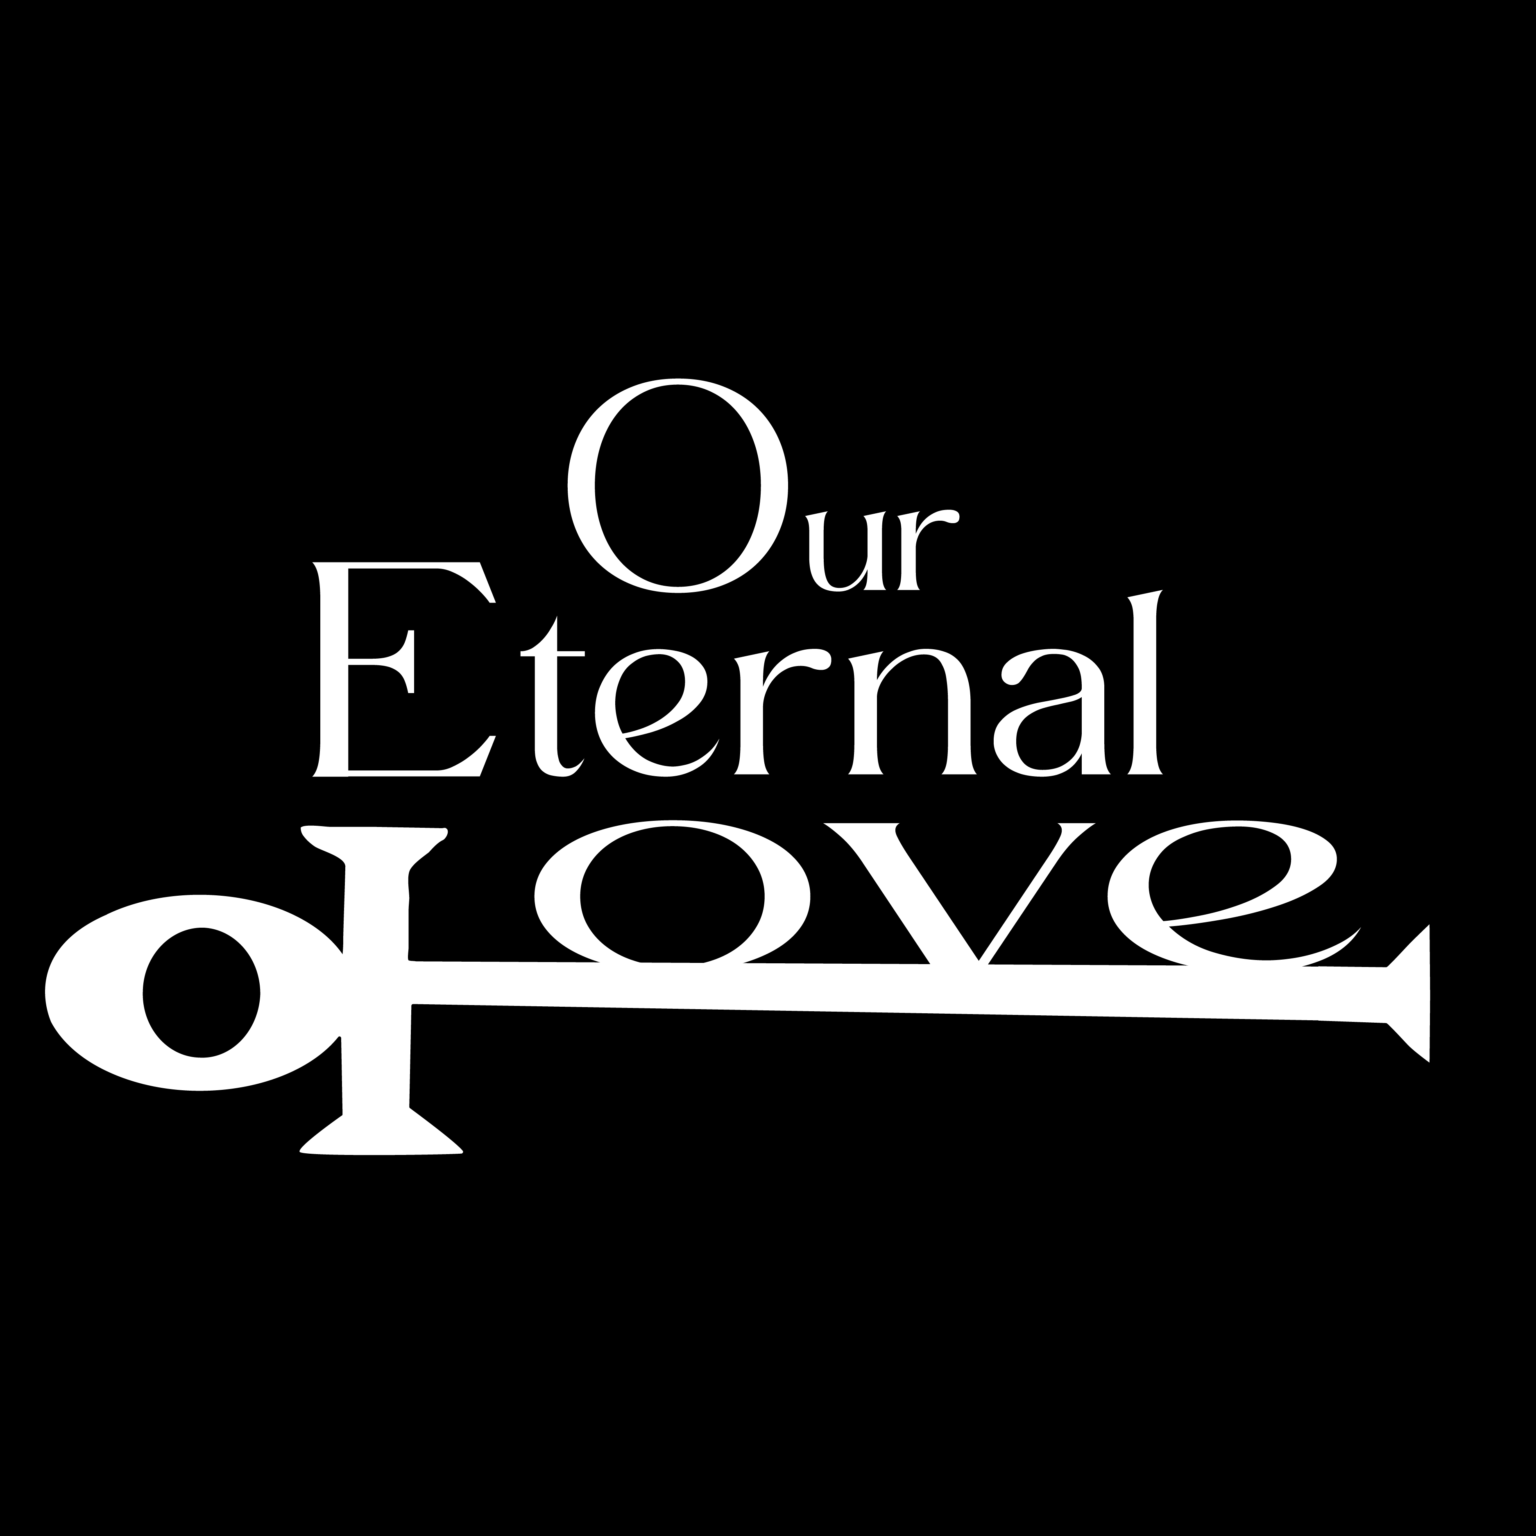 Our Eternal Love